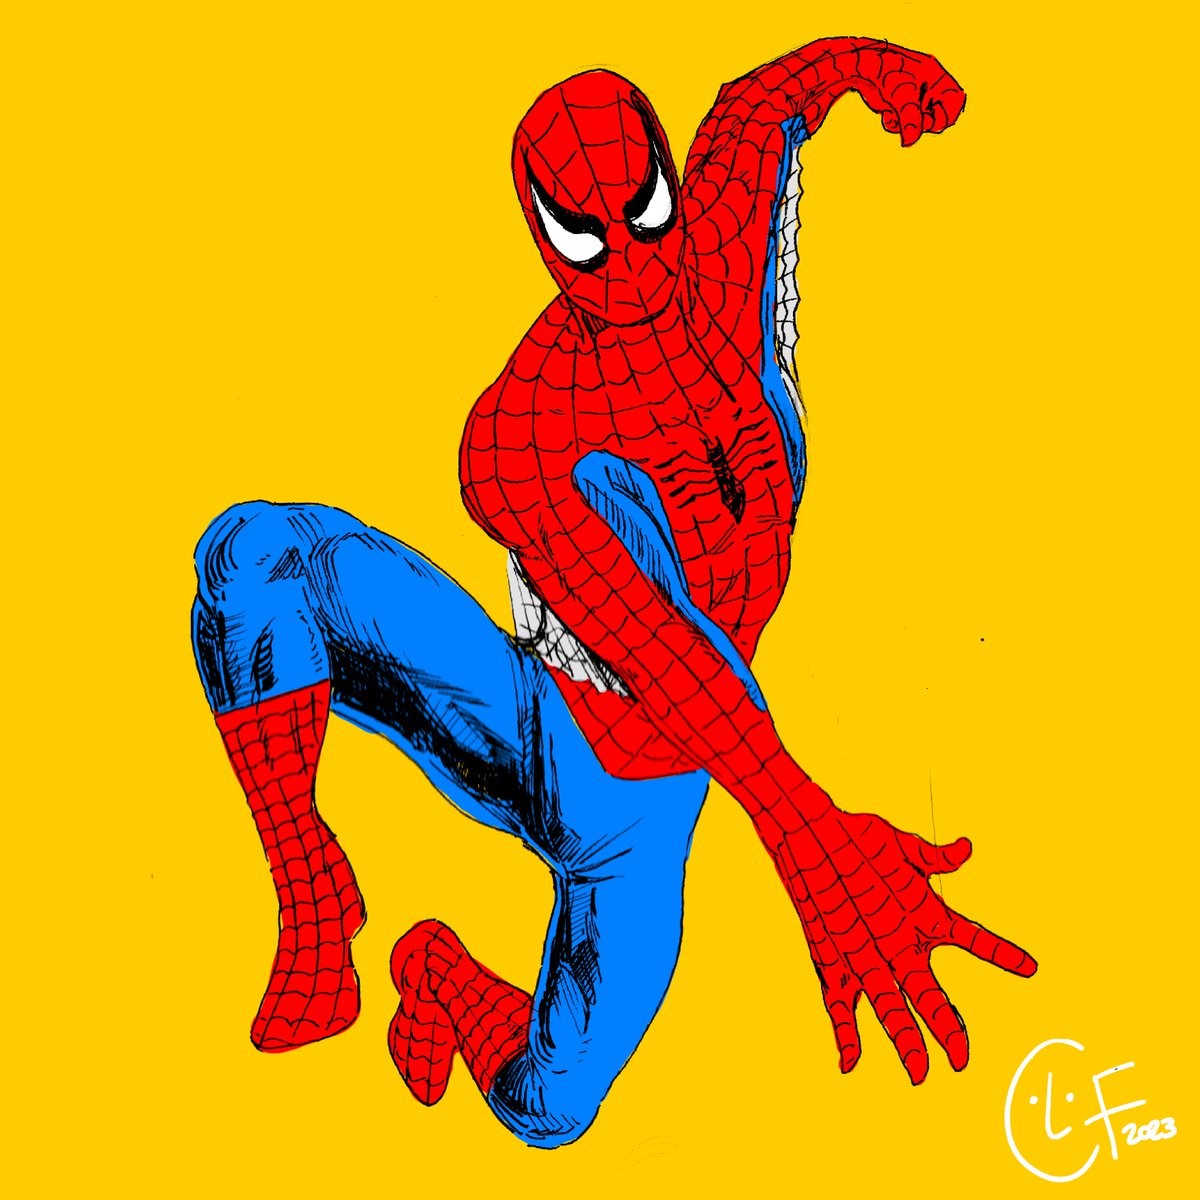 Spider-Man drawings from my sketchbook and digitally coloured.

#marvelcomics #marvel #theamazingspiderman #spiderman #peterparker #digitalart #superhero #wallcrawler #webhead #spidey #ArtistOnTwitter 

1m